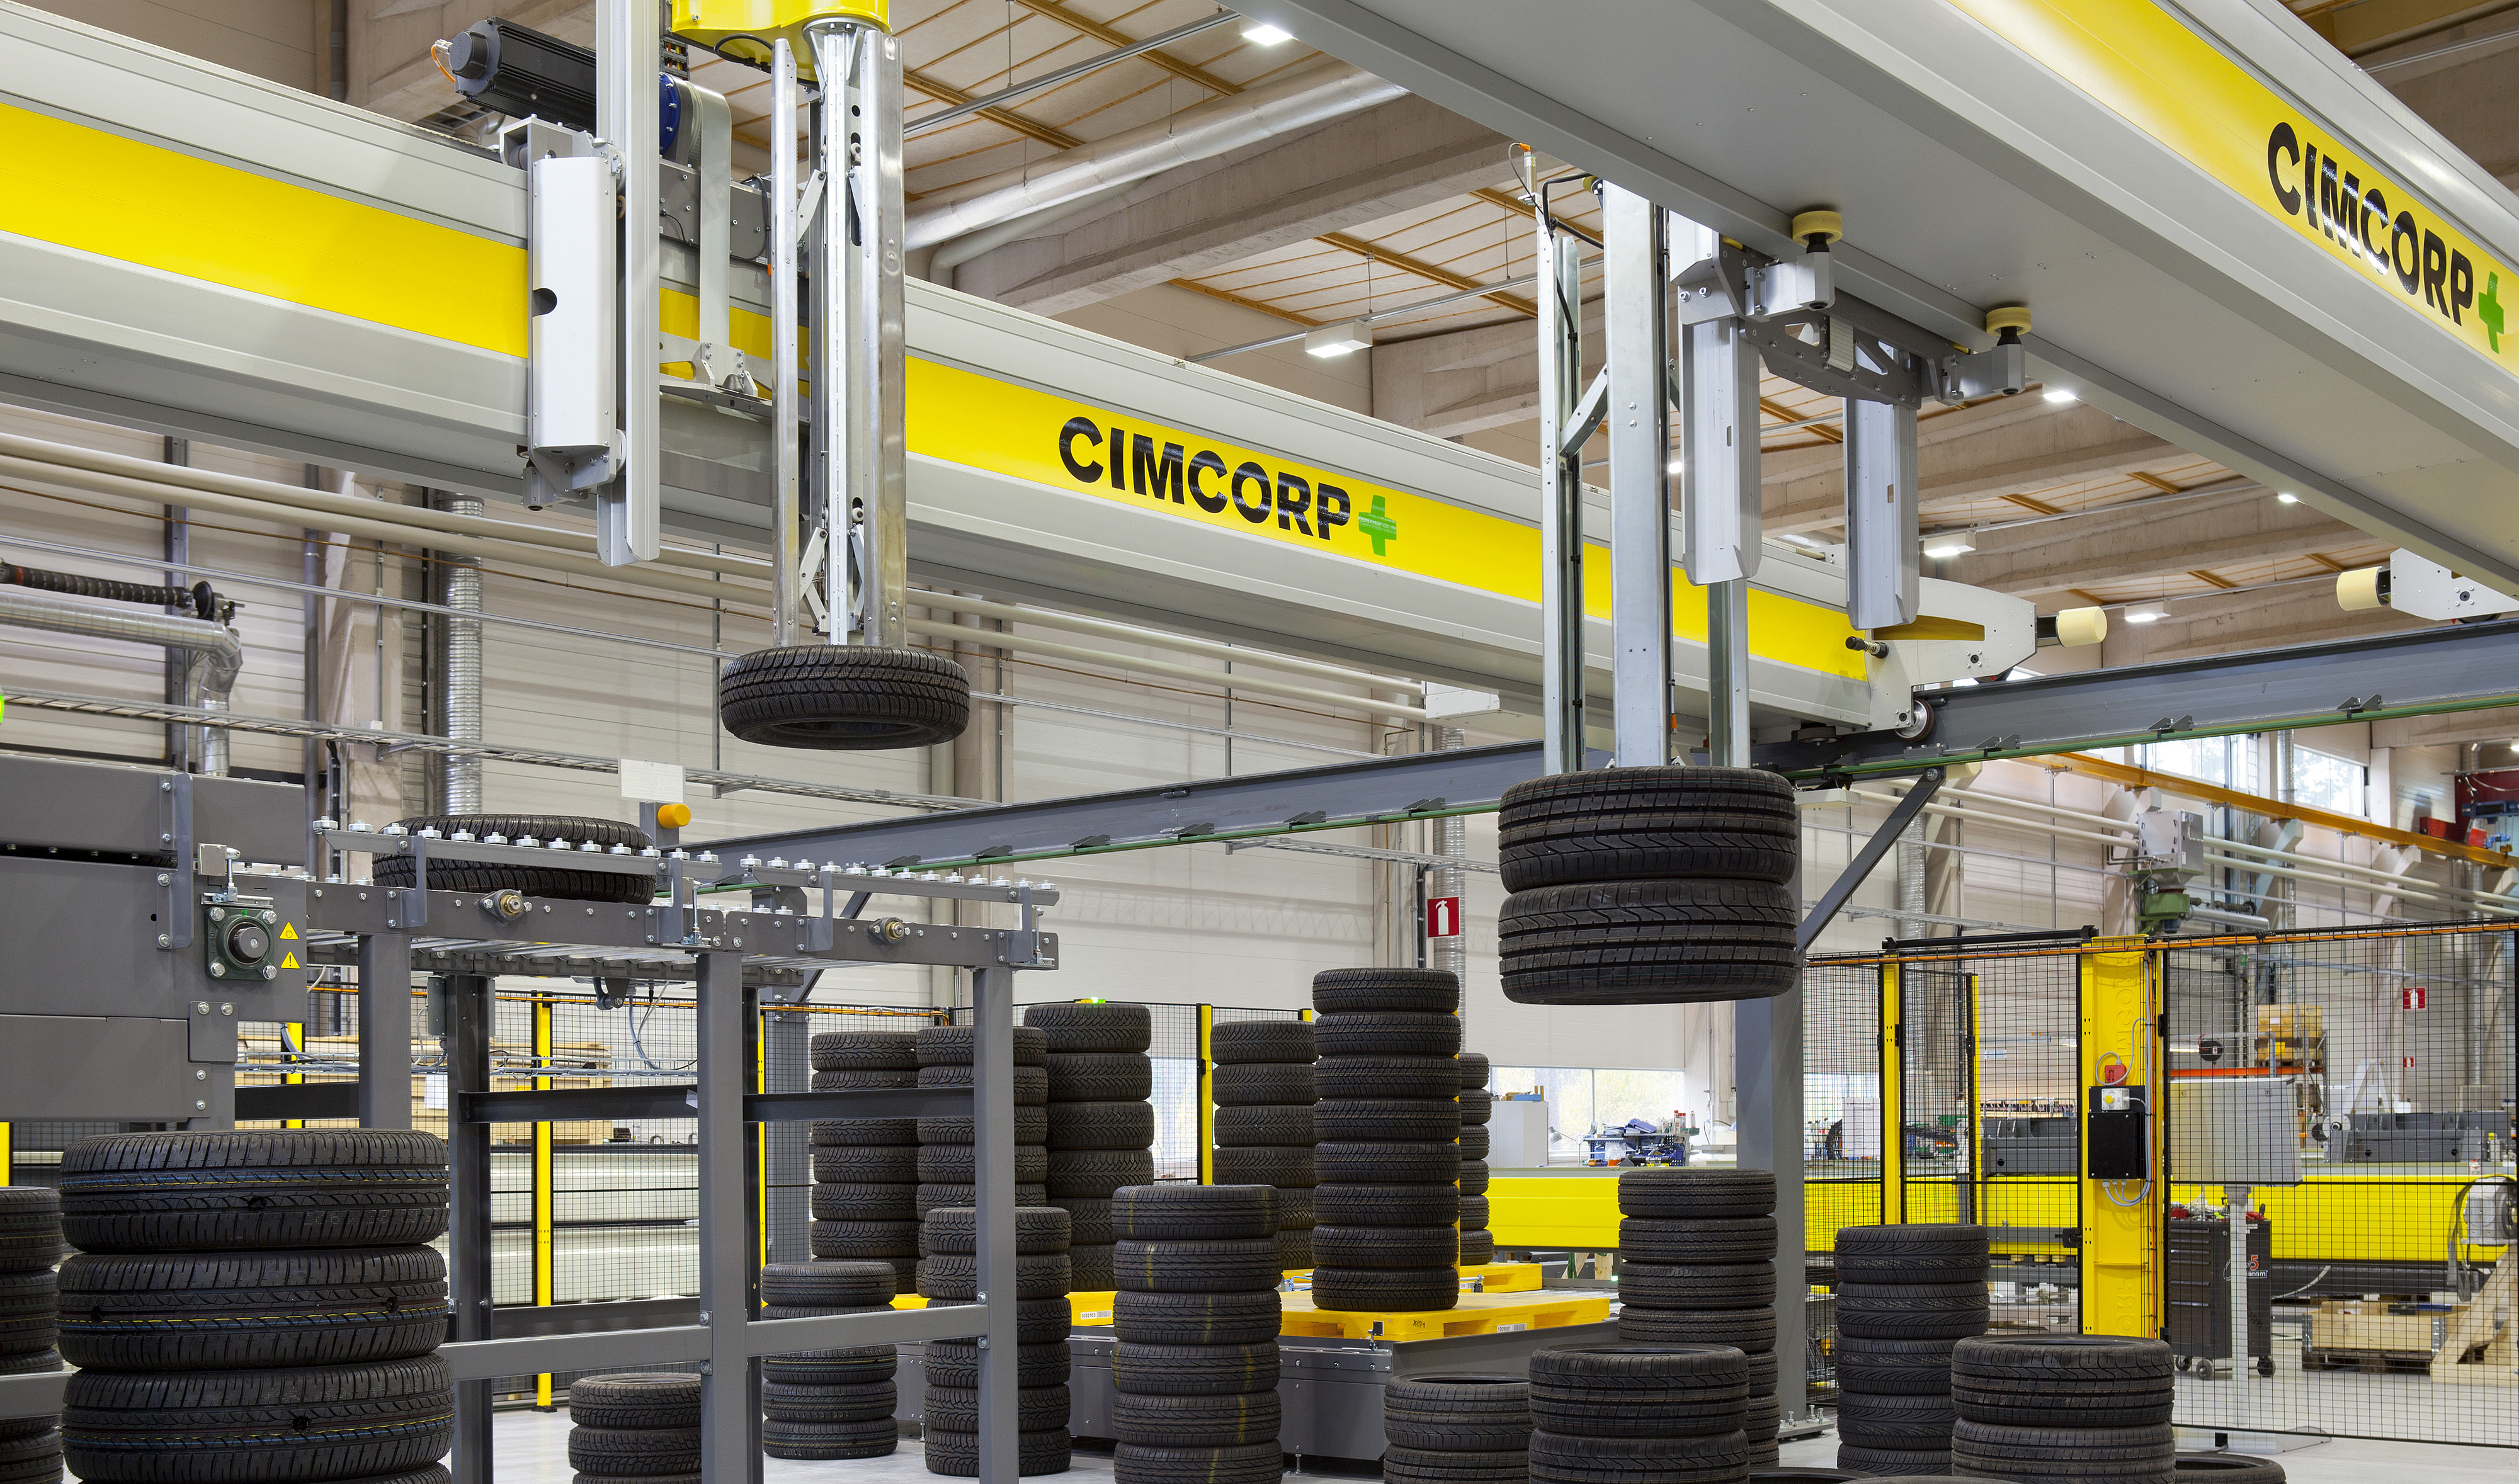 Cimcorp supplying automated handling system to Petlas